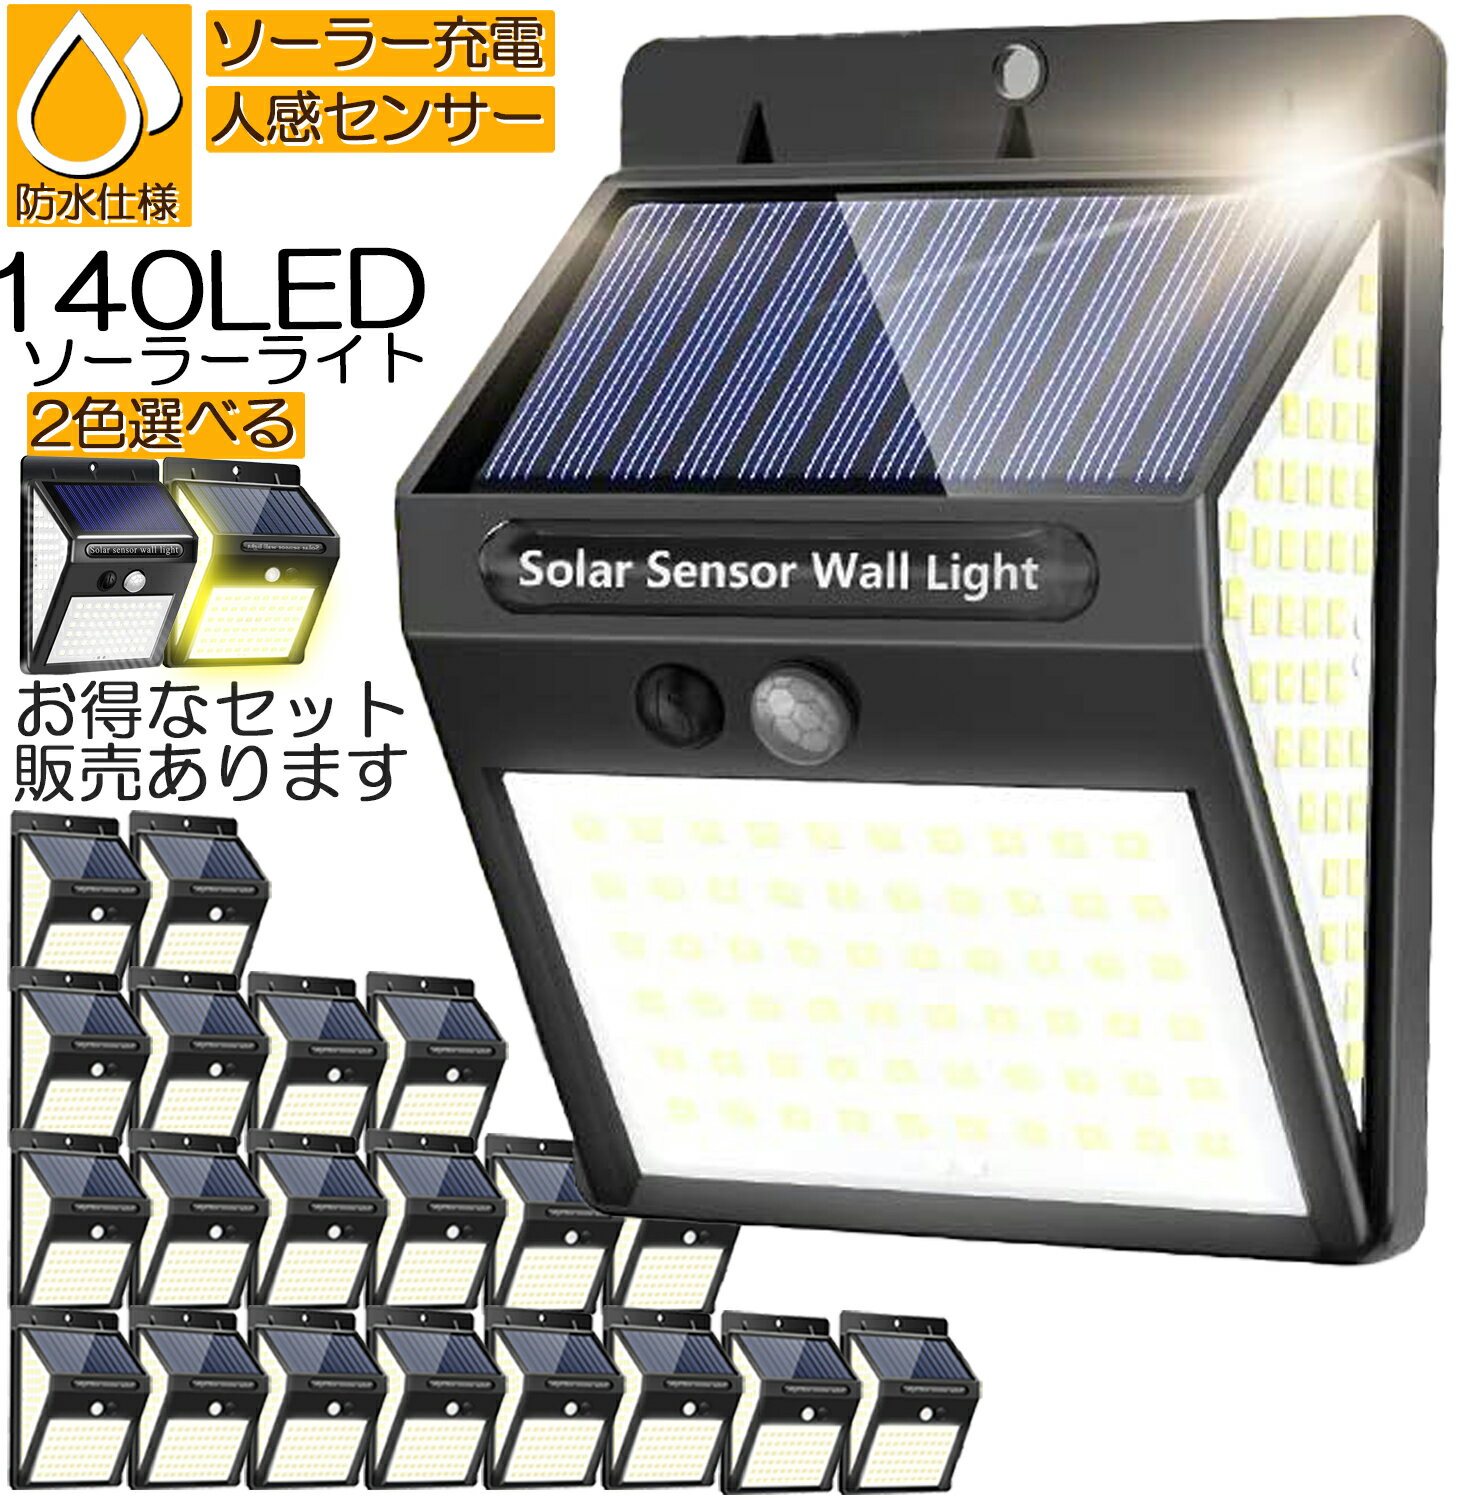 140LED 3面発光 センサーライト ソーラーライト 30